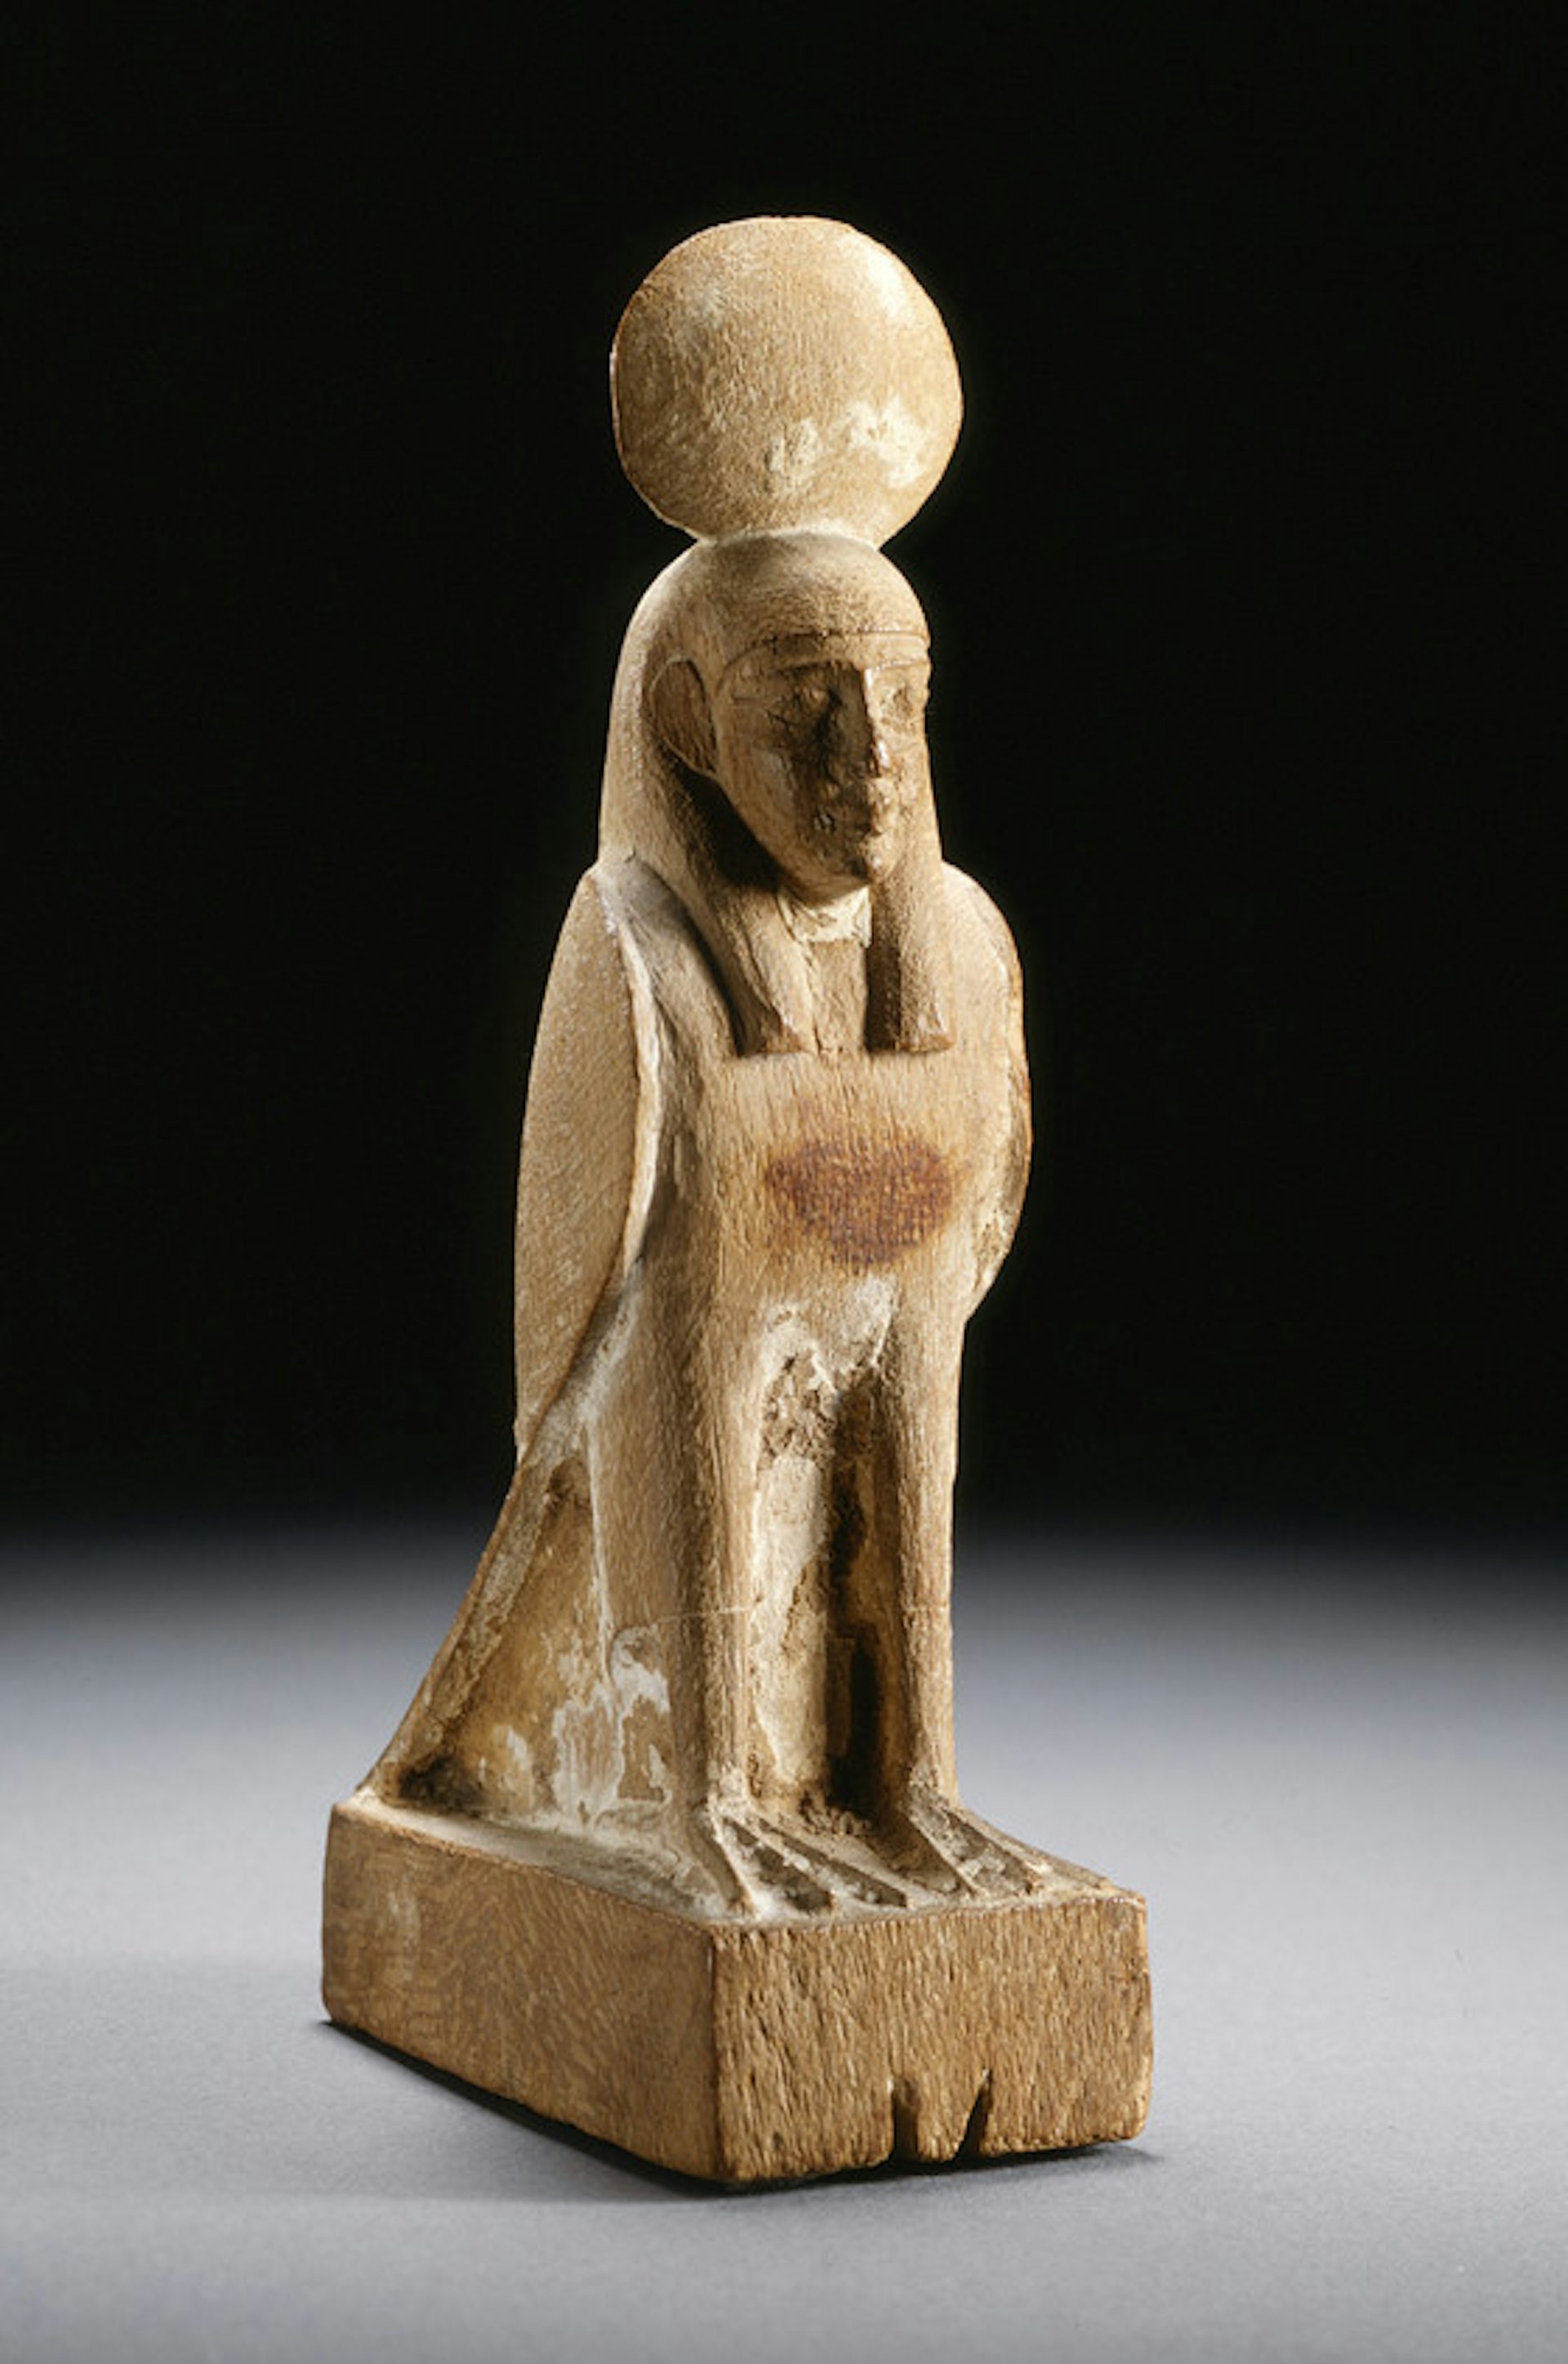 Ba, probably from new kingdom circa 1550-1070 BCE